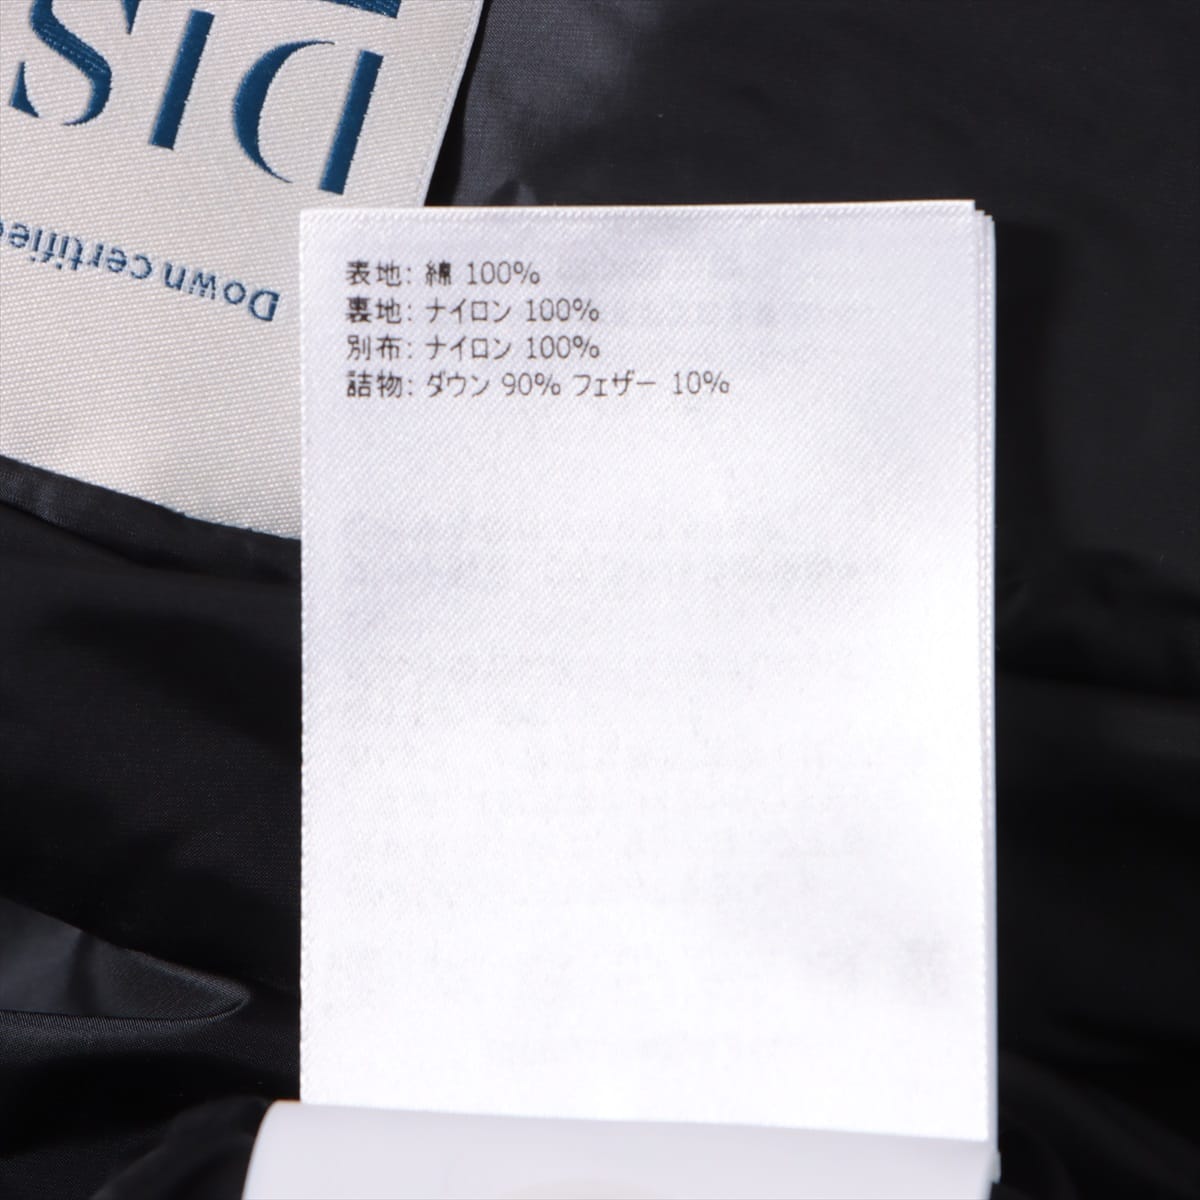 Moncler Genius Fragment 20 years Cotton Down vest 2 Men's Black × White  DAXY HIROSHI FUJIWARA